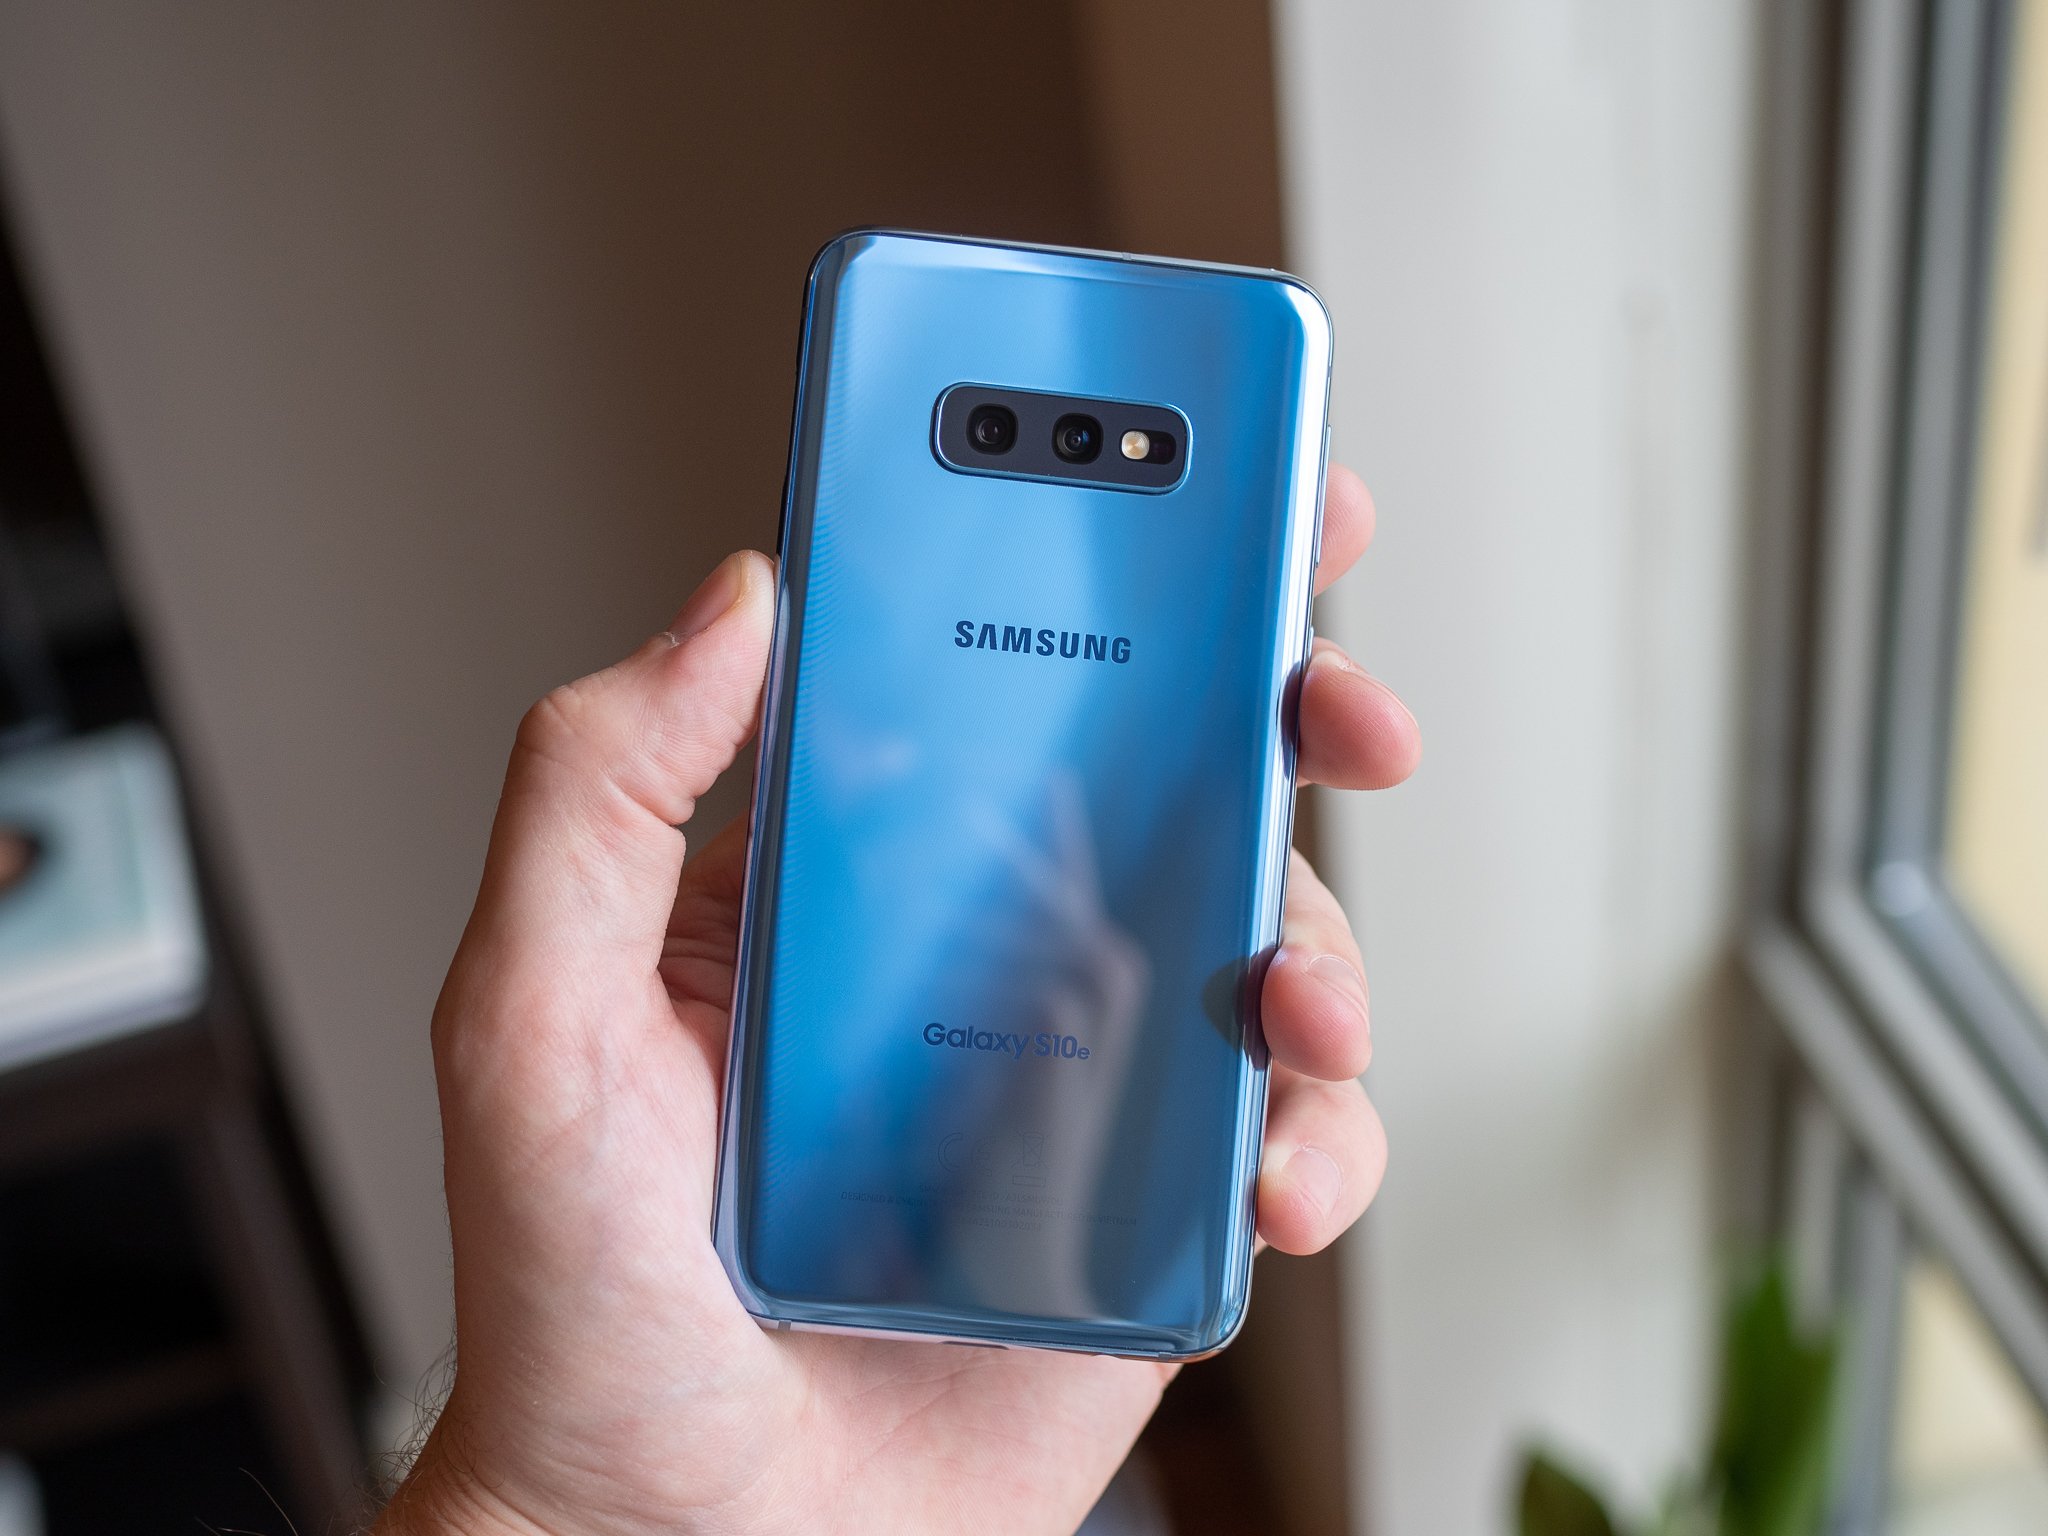 Хороший телефон с памятью 128. Samsung Galaxy s10e. Samsung Galaxy 10e. Samsung Galaxy s10e Blue. Самсунг галакси с 10e.